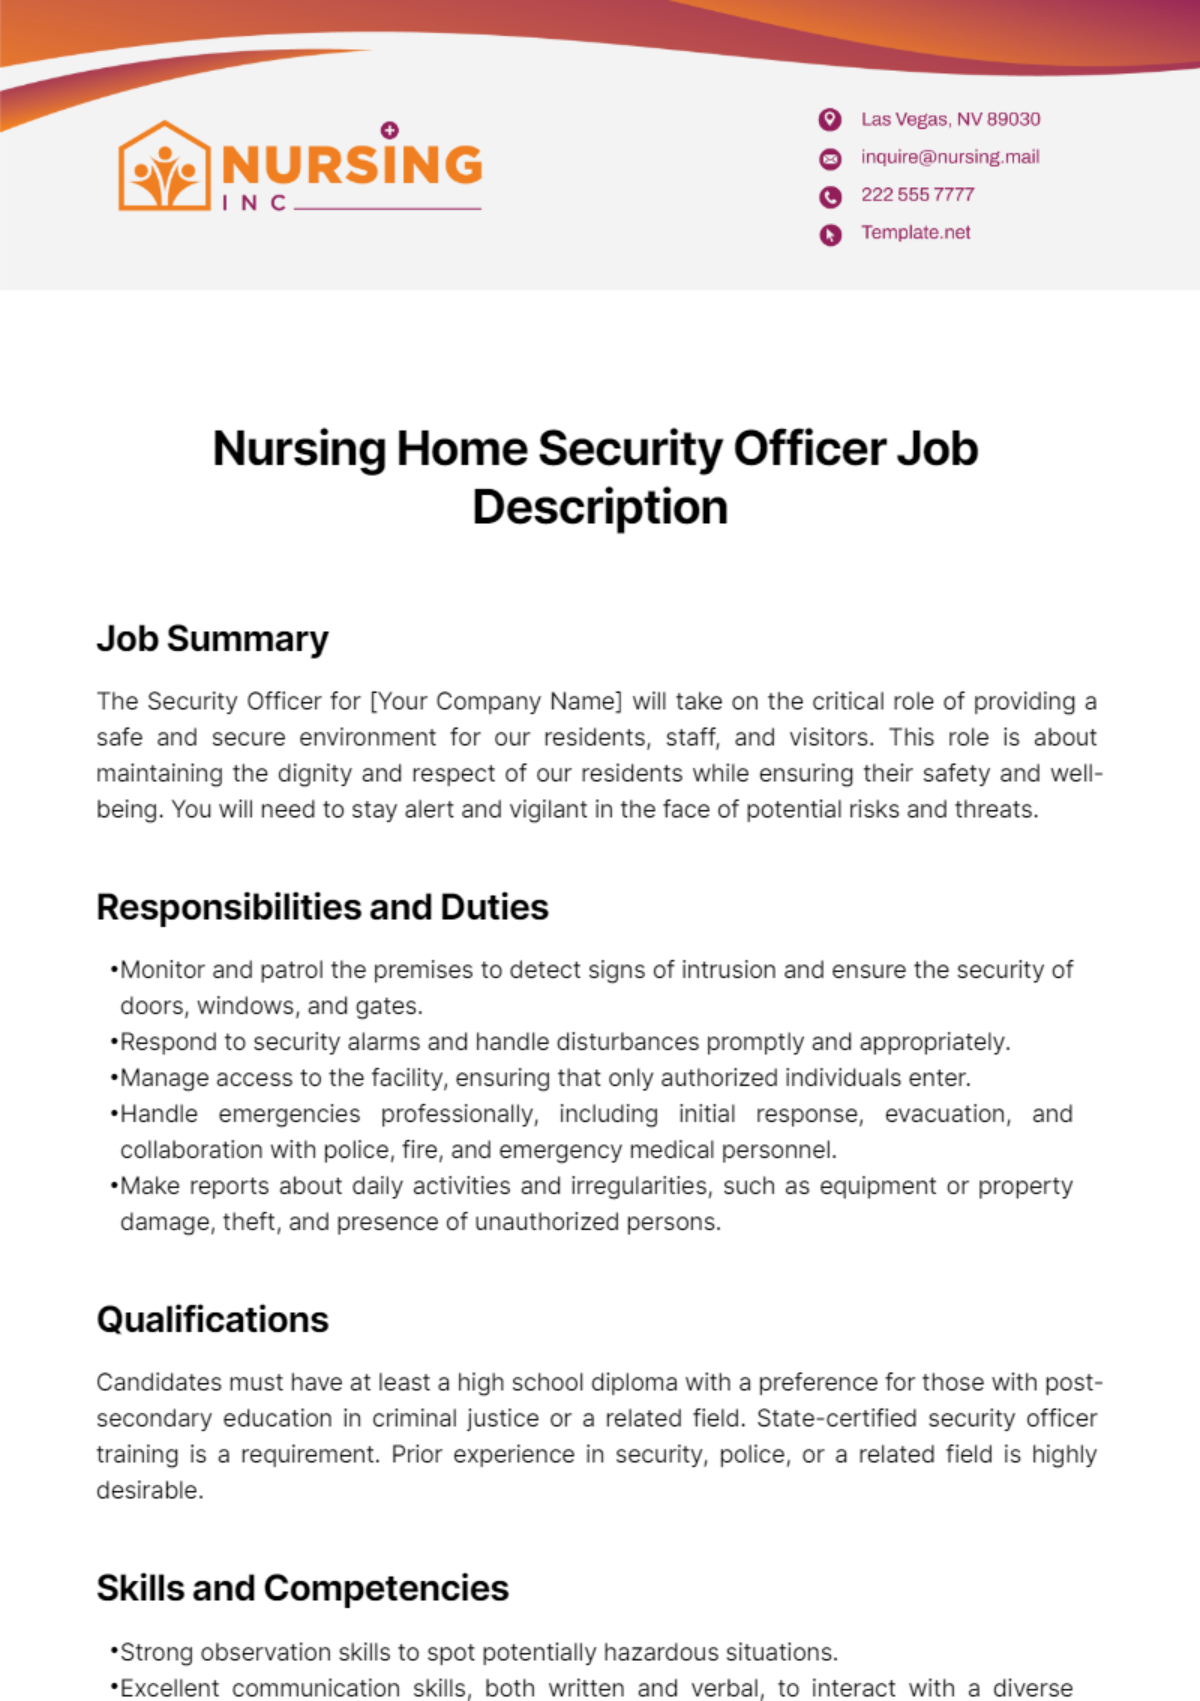 Free Nursing Home Security Officer Job Description Template